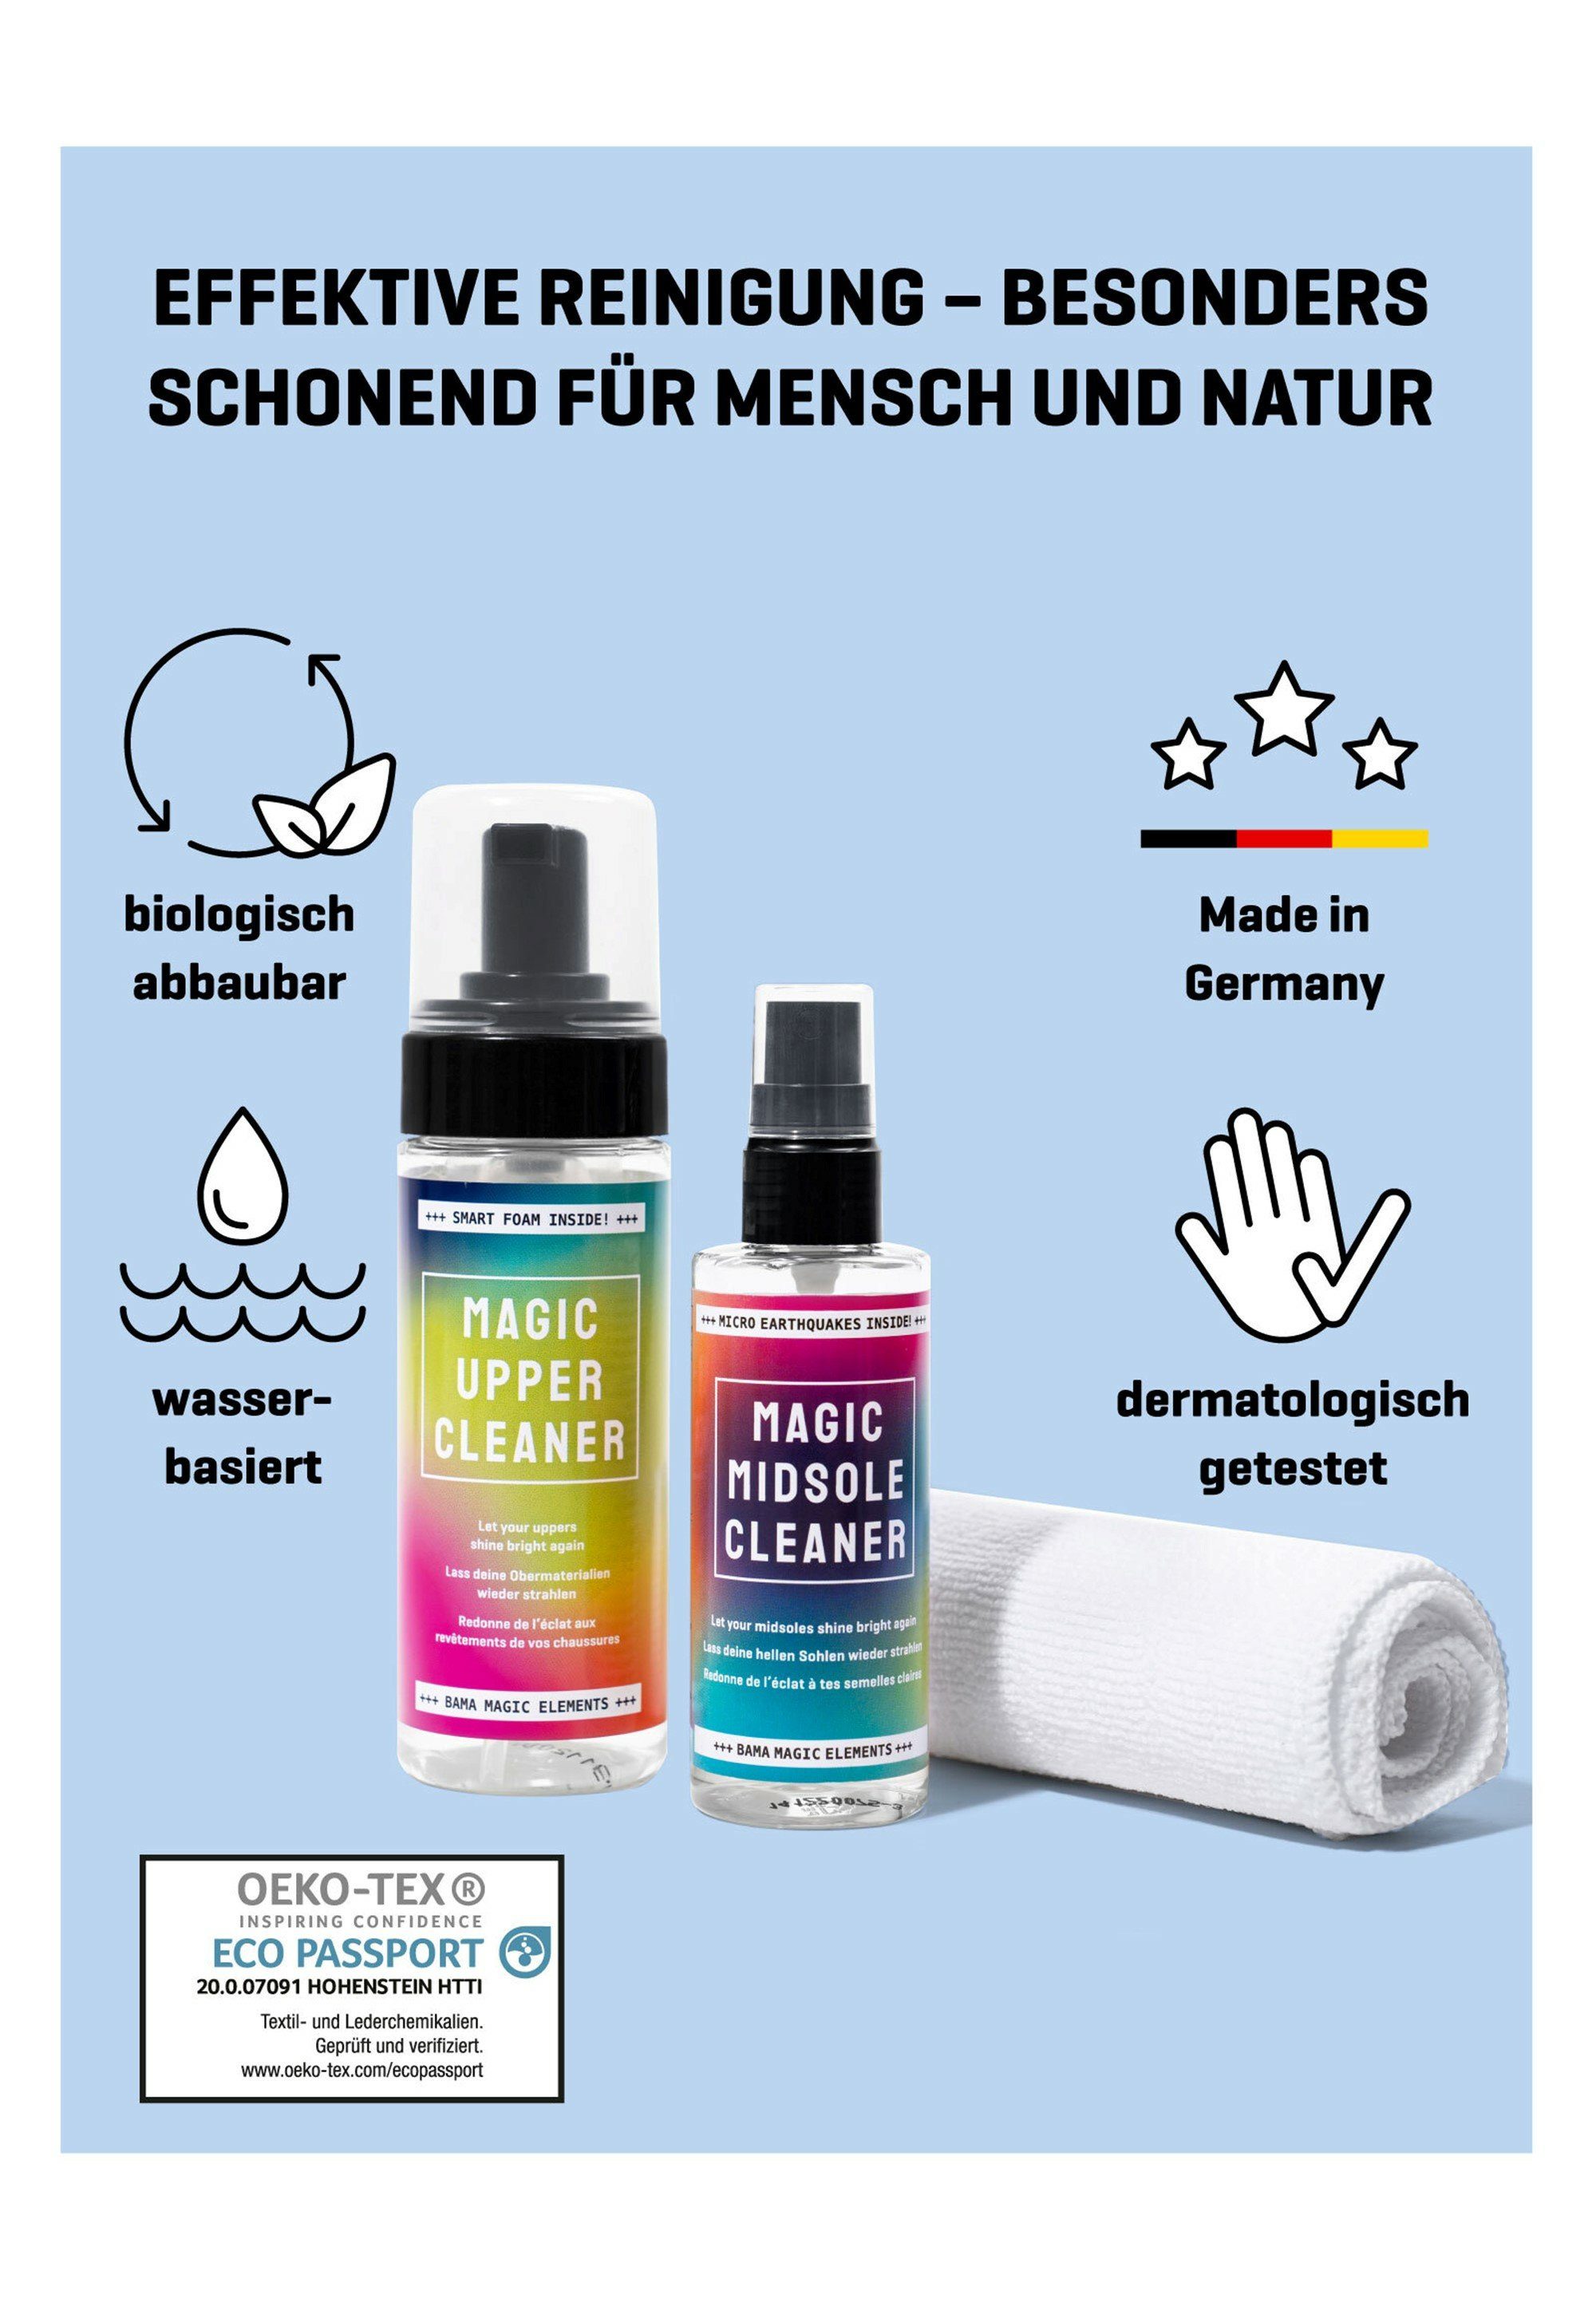 Schuhreiniger + BAMA Magic Cleaner Group + Set (1x 1x Upper Tuch Cleaning Magic Cleaner Bama Midsole Magic gratis) 1x